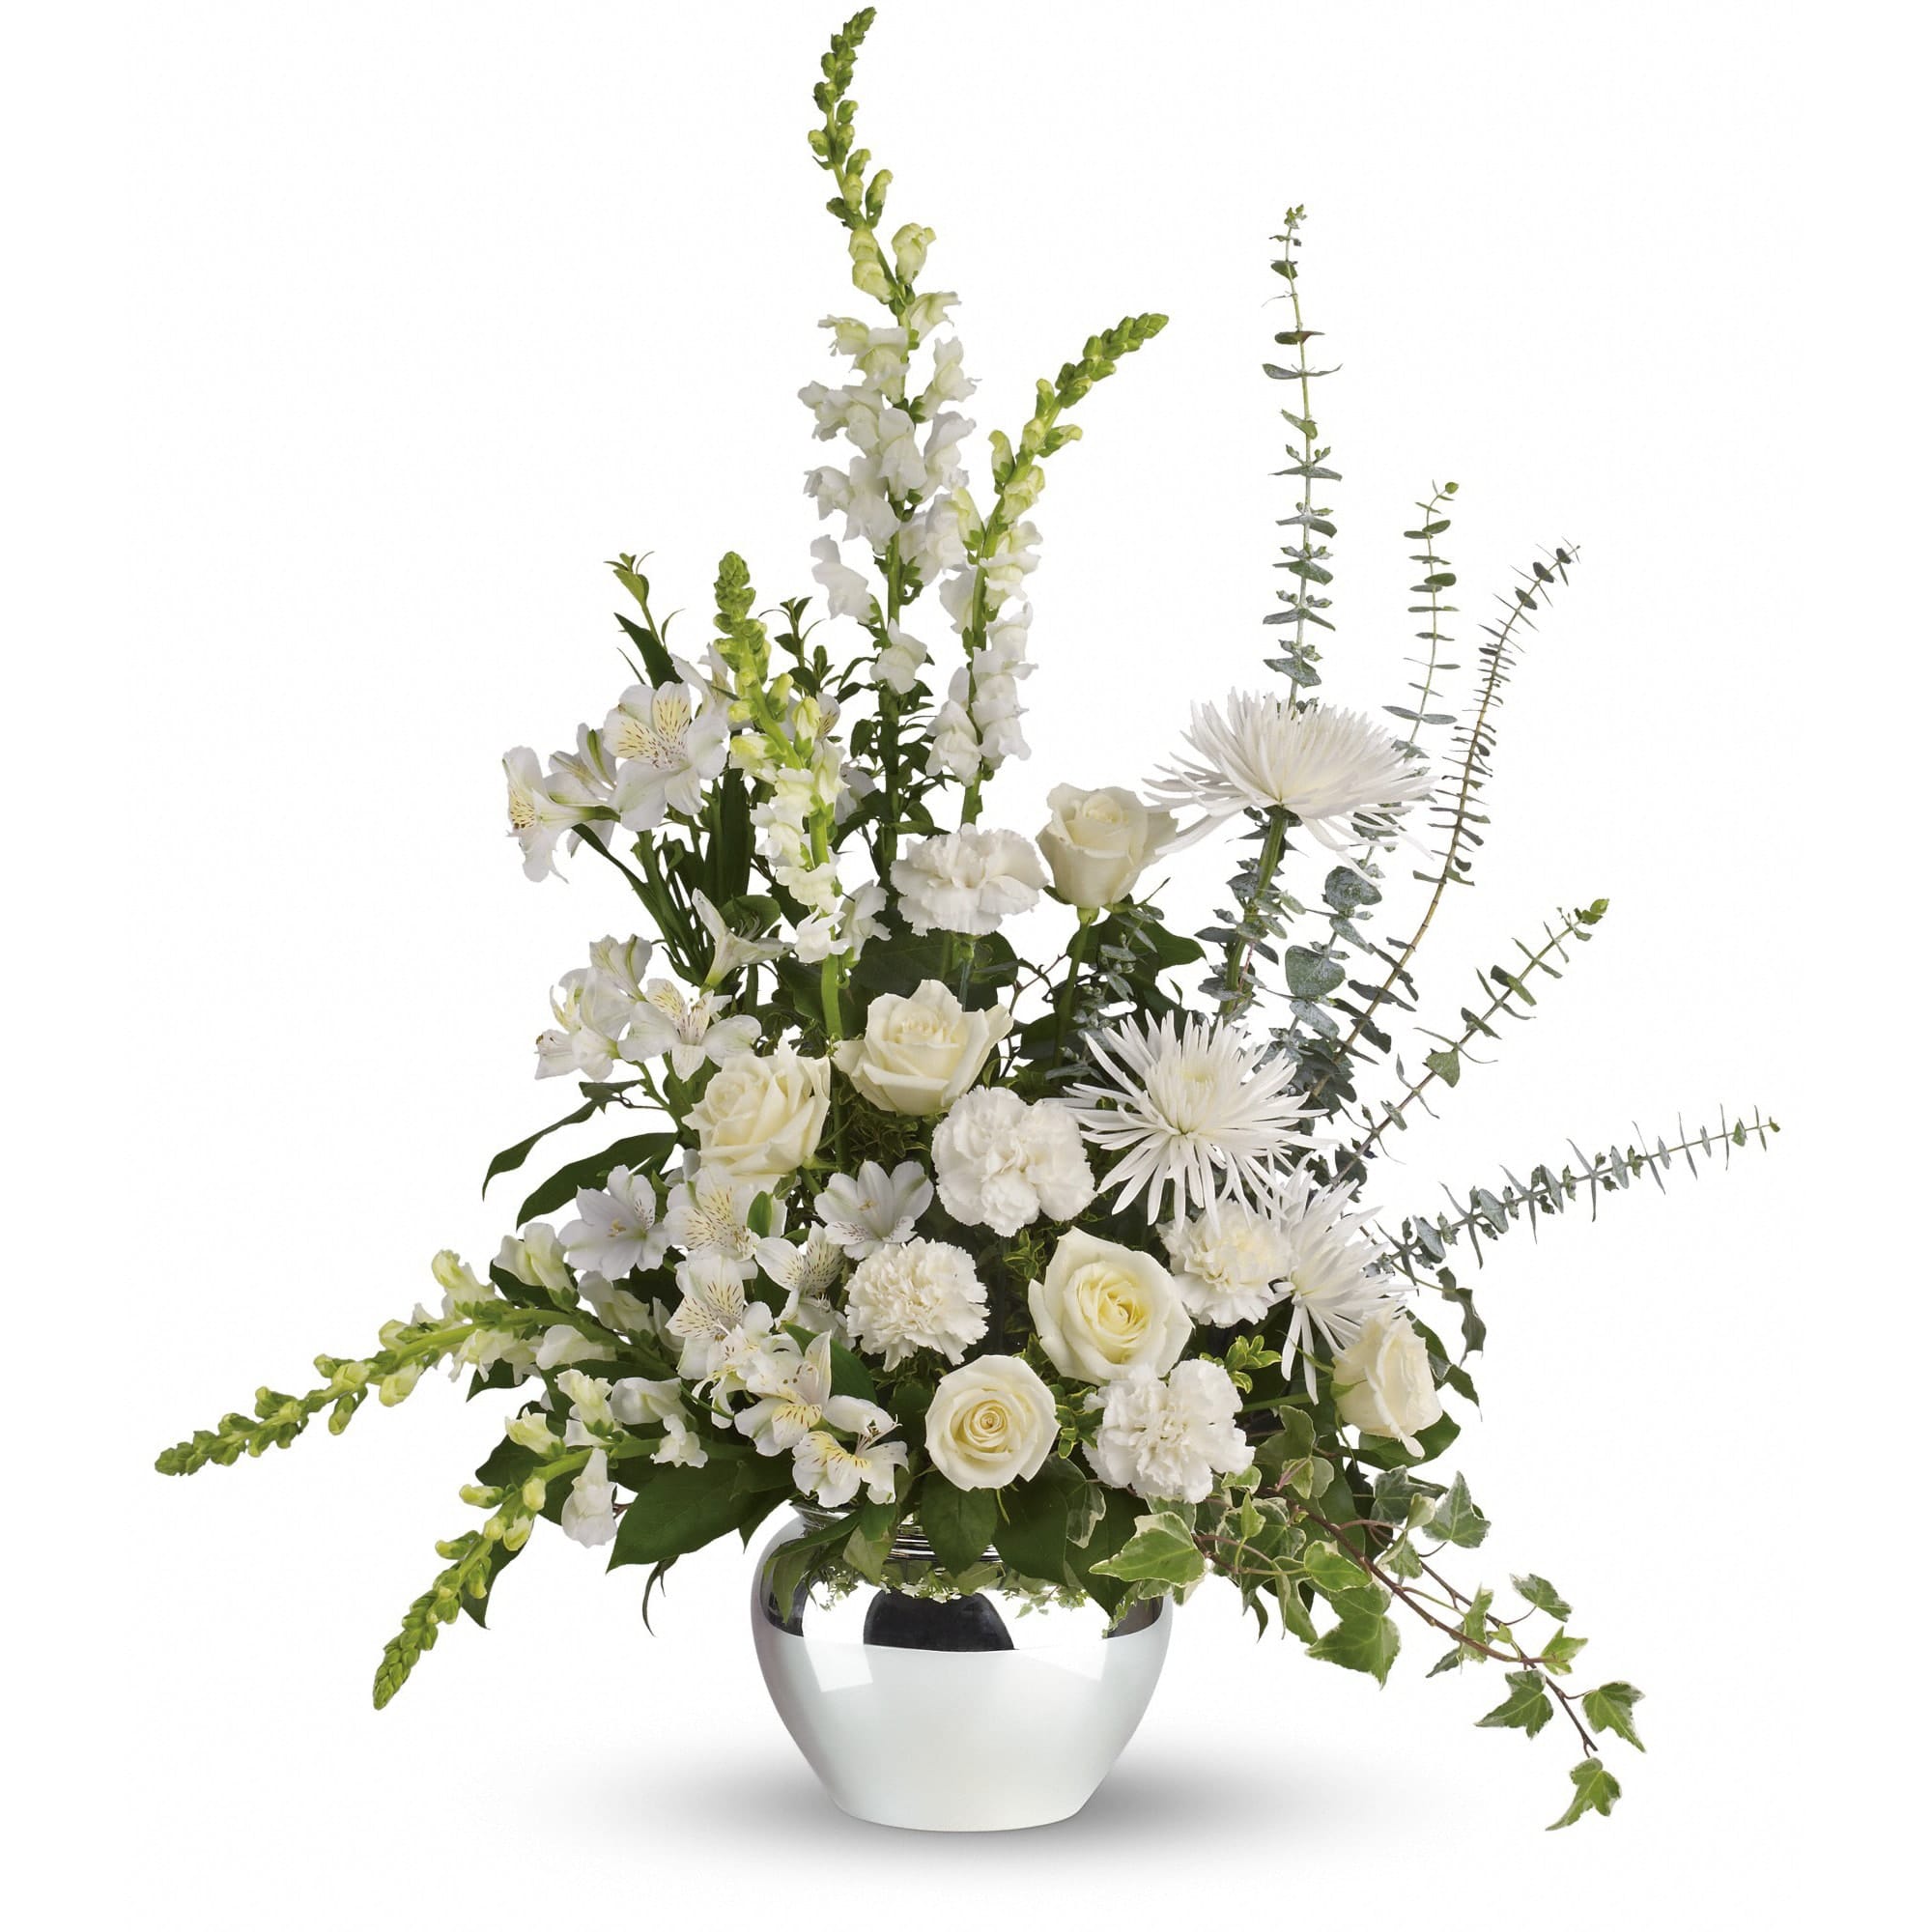 white roses, white alstroemeria, white carnations, white snapdragons